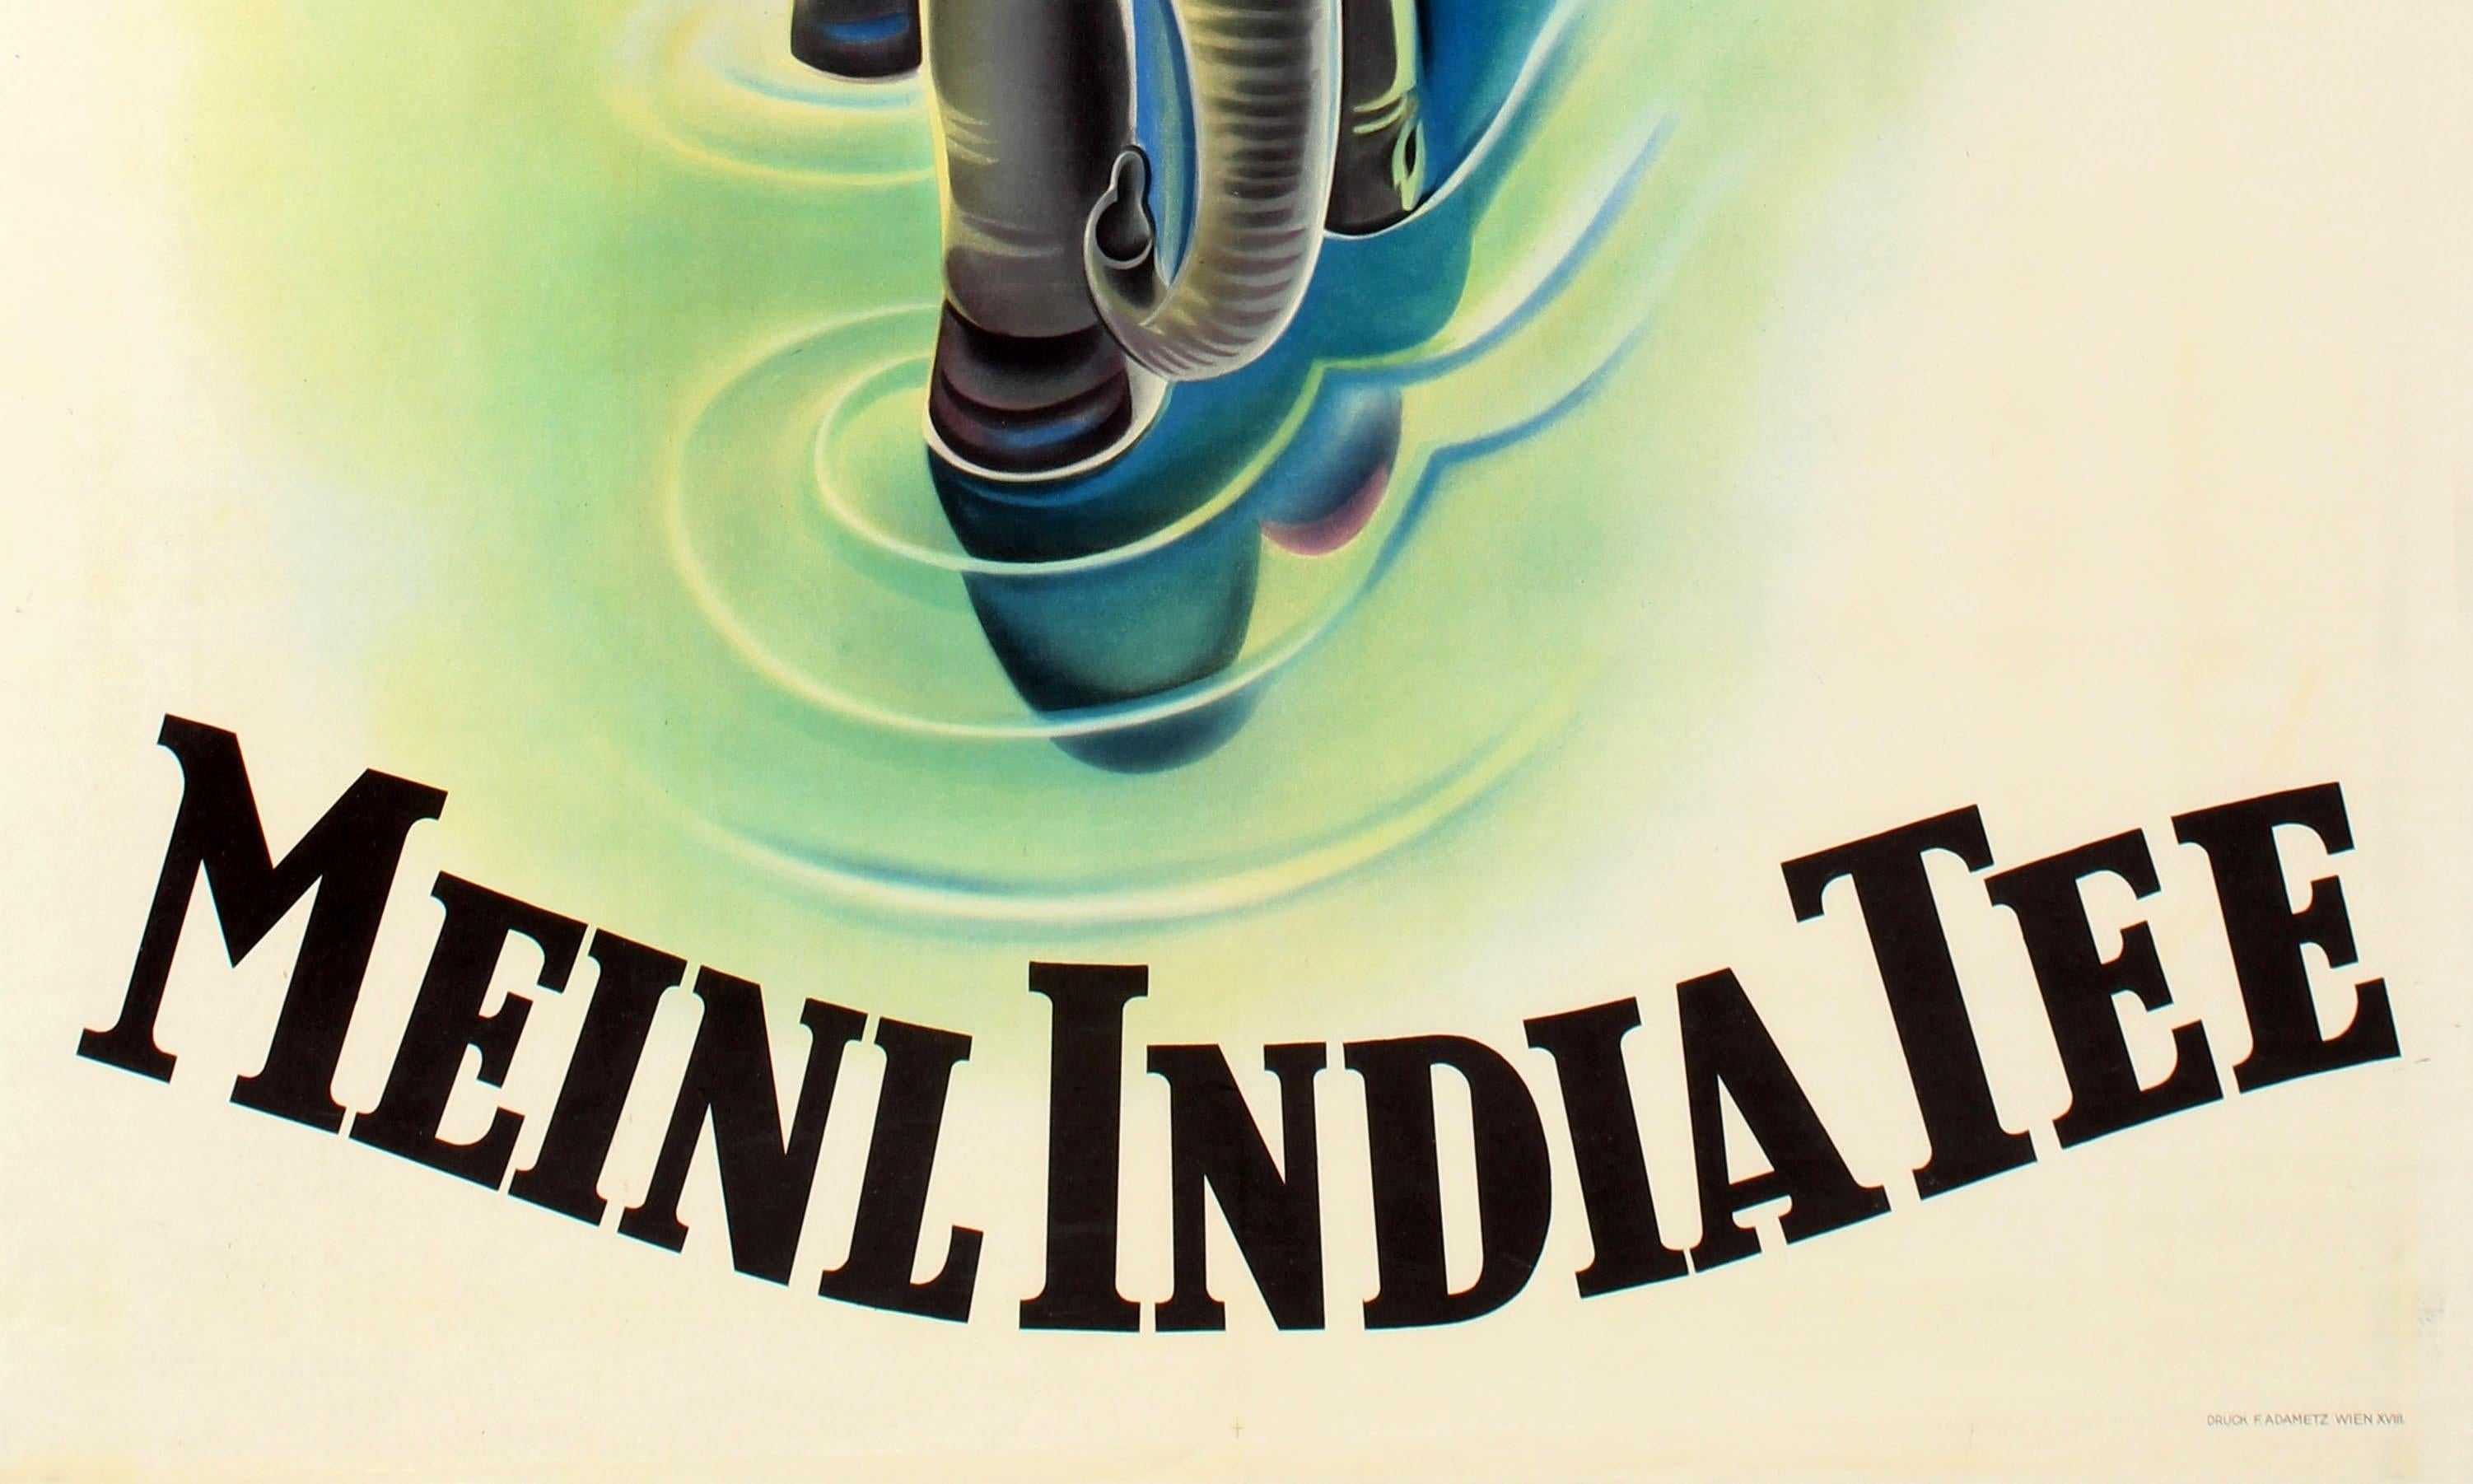 Austrian Original Vintage Tea Drink Advertising Poster for Meinl India Tee Ft. Elephant